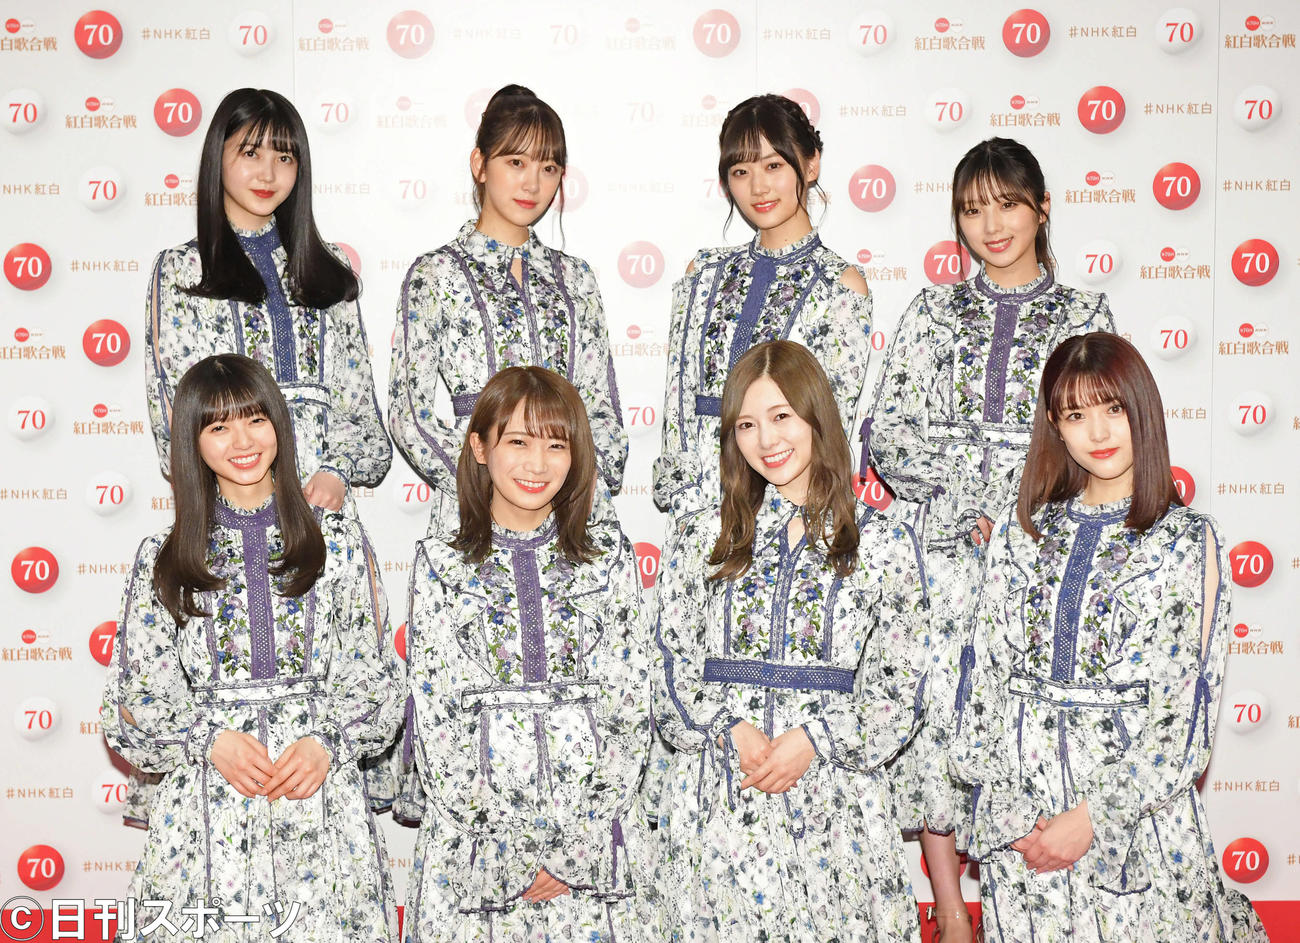 NHK紅白歌合戦のリハーサルを終え、笑顔で撮影に応じる乃木坂46。前列右端が松村（2019年12月29日撮影）